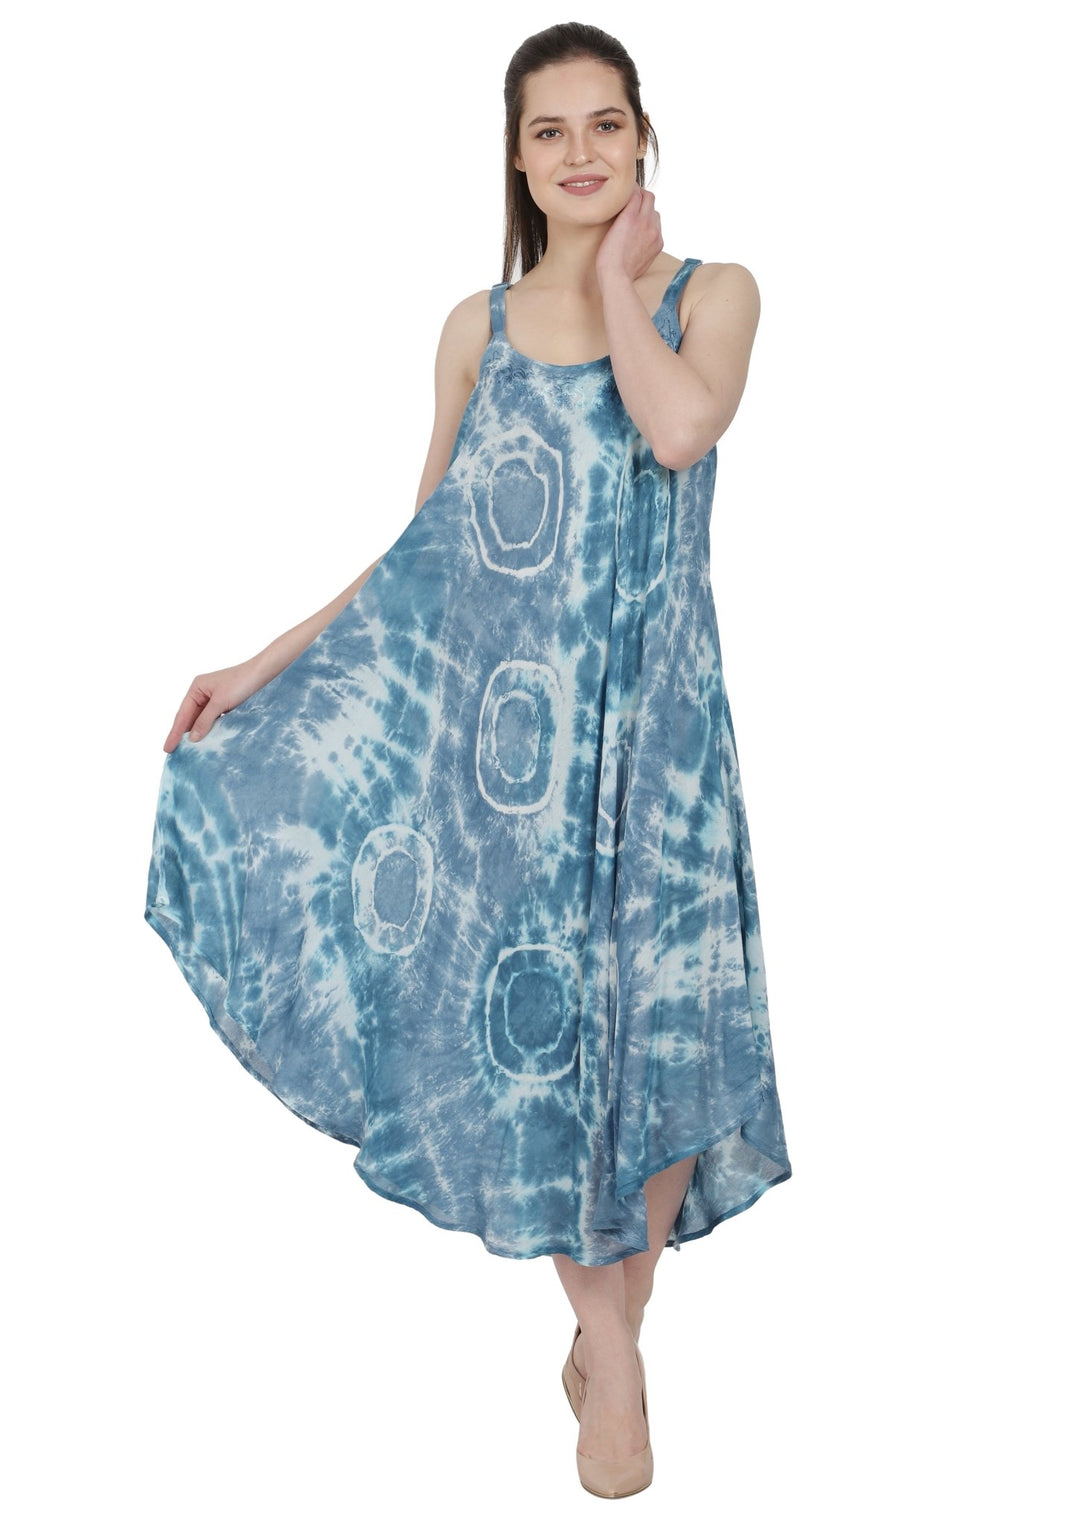 Ocean Swirl Beach Umbrella Dress UD48-2371 - Advance Apparels Inc